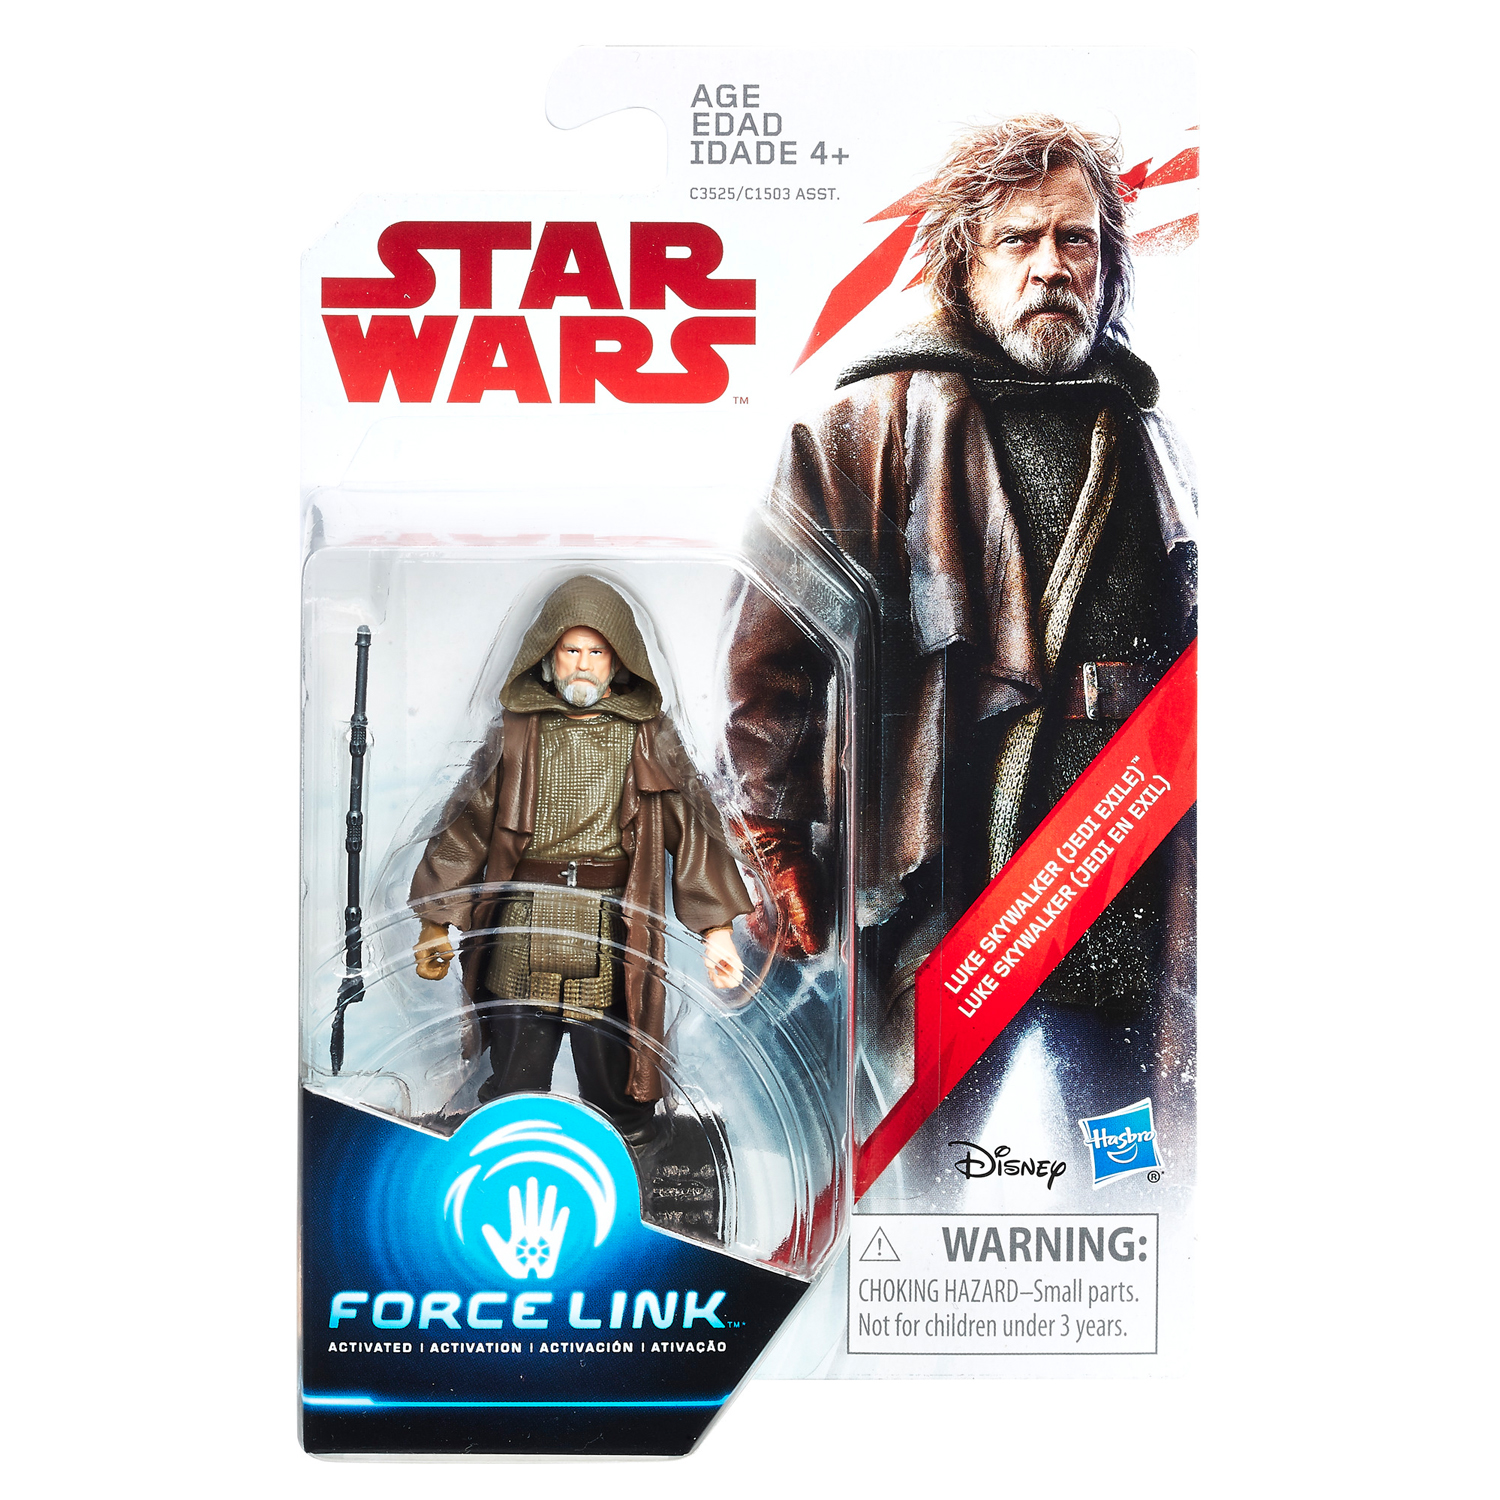 Star Wars Luke Skywalker (Jedi Exile) Force Link Figure - image 2 of 2